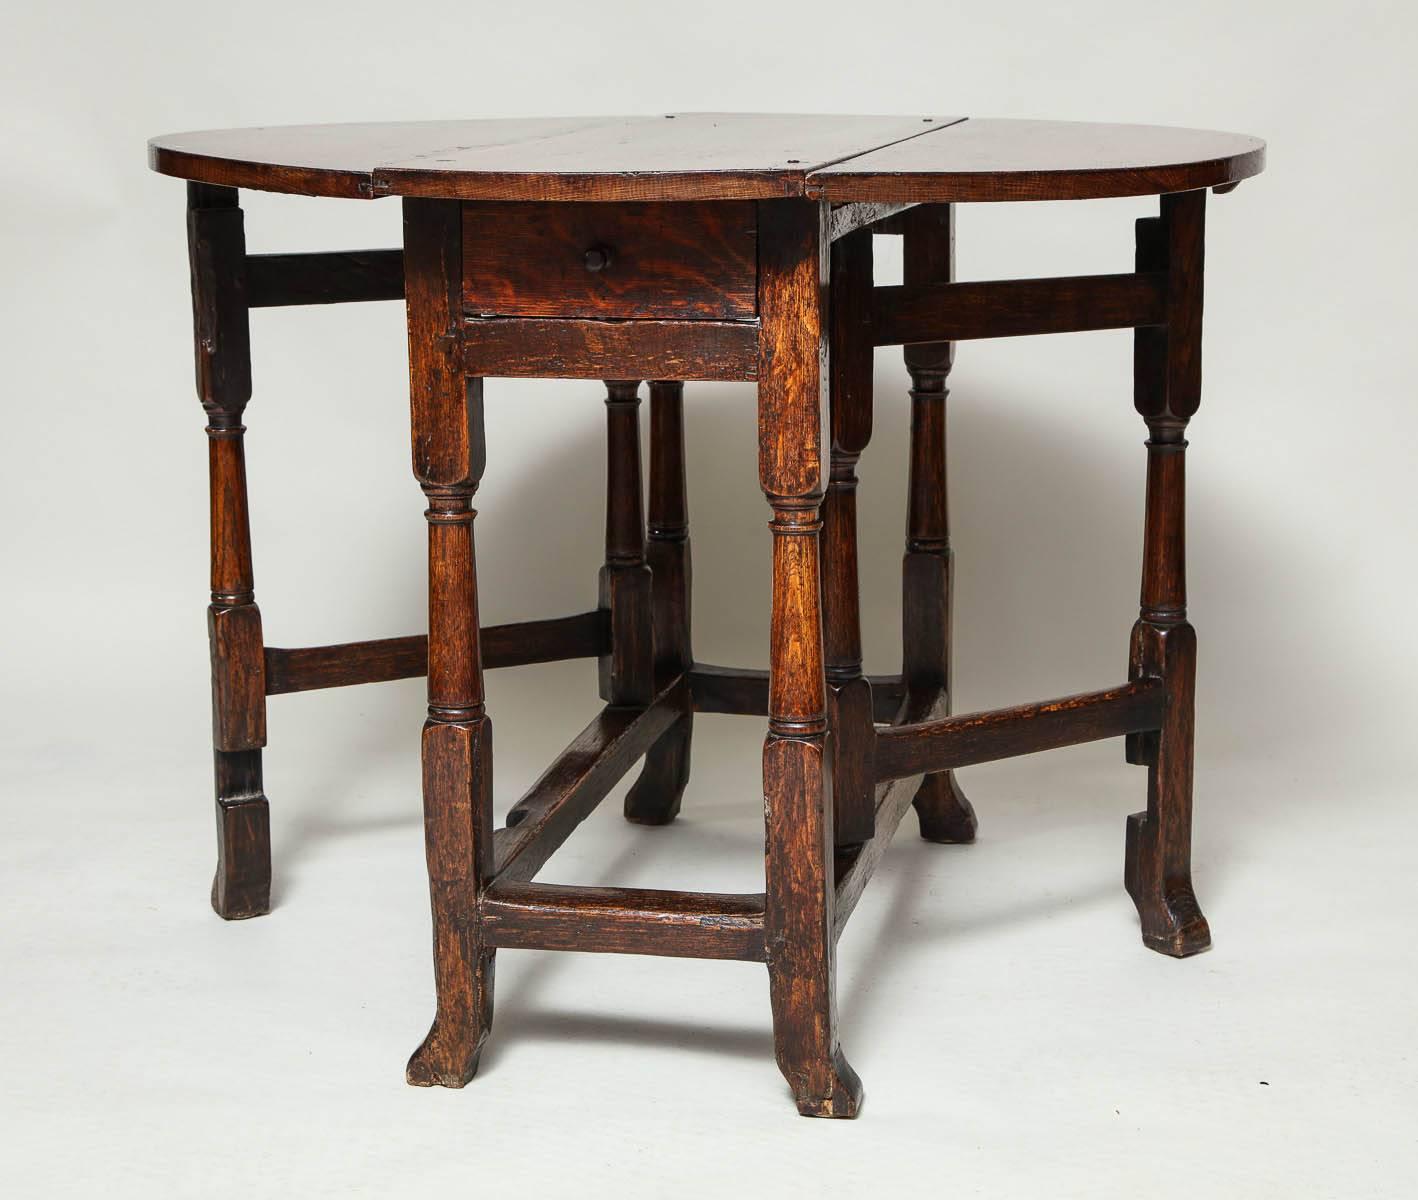 Early 18th Century Diminutive Gateleg Table